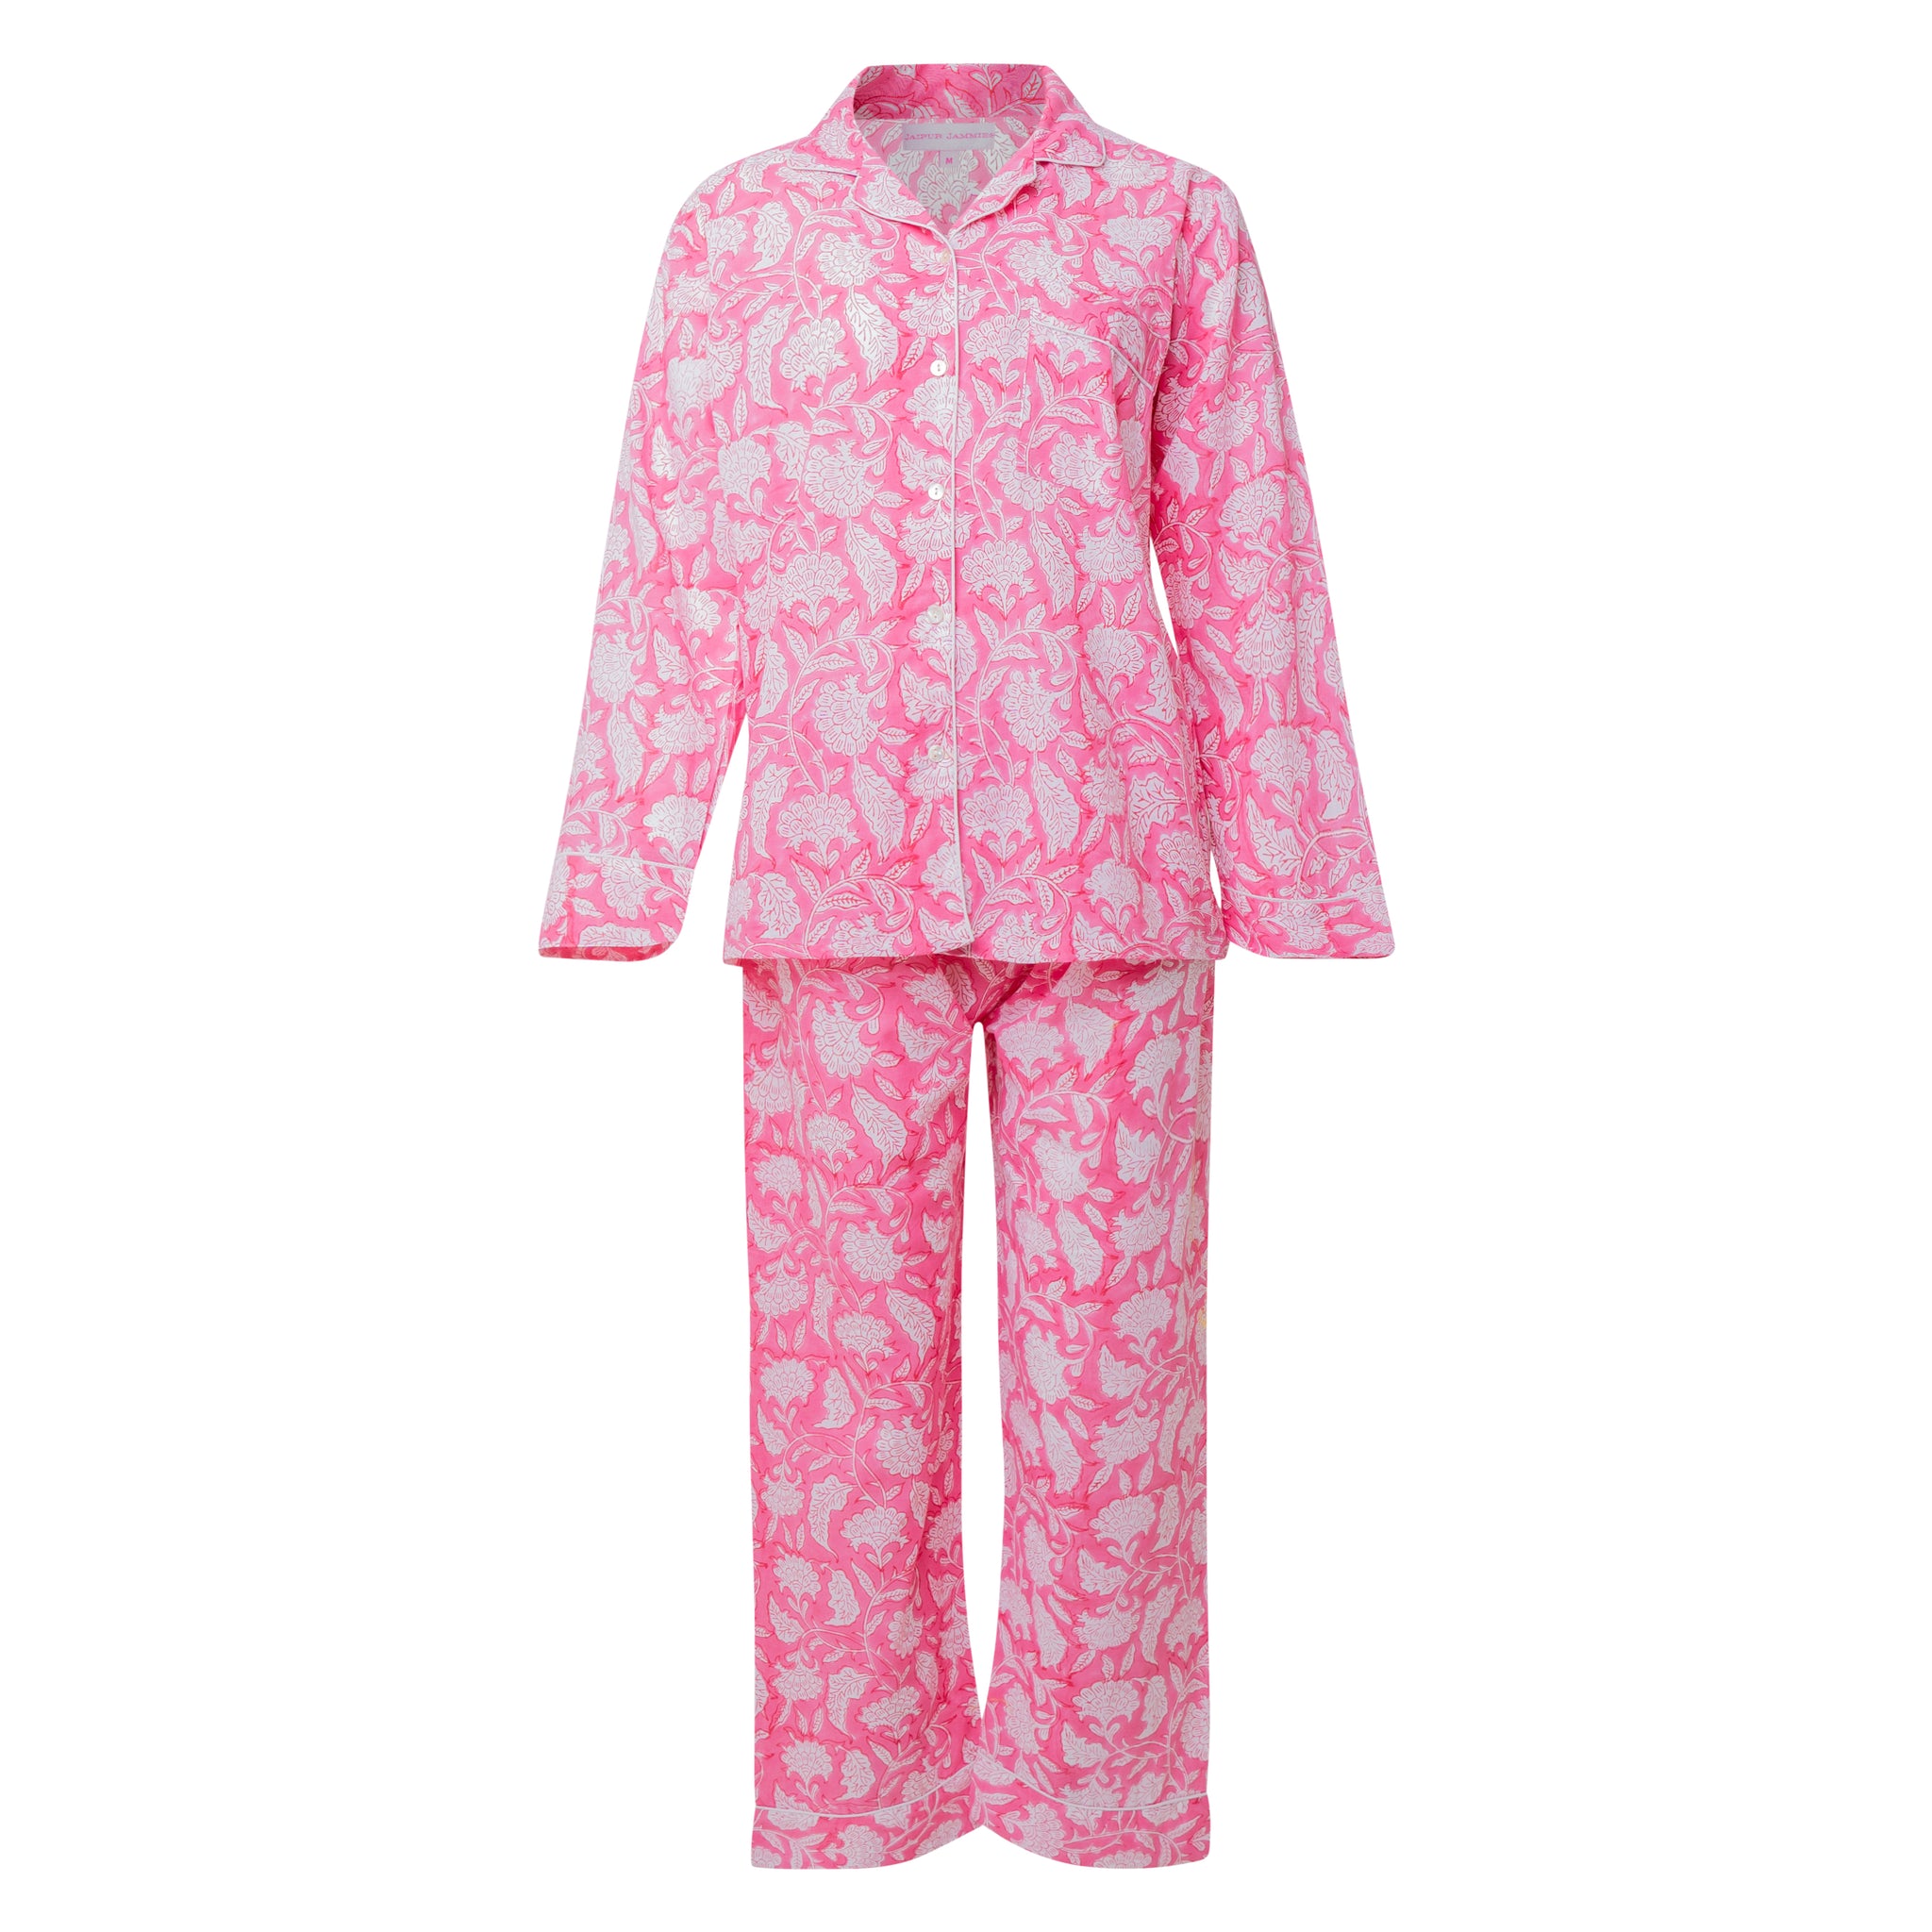 Long Sleeve Pyjama Set - Pretty in Pink is